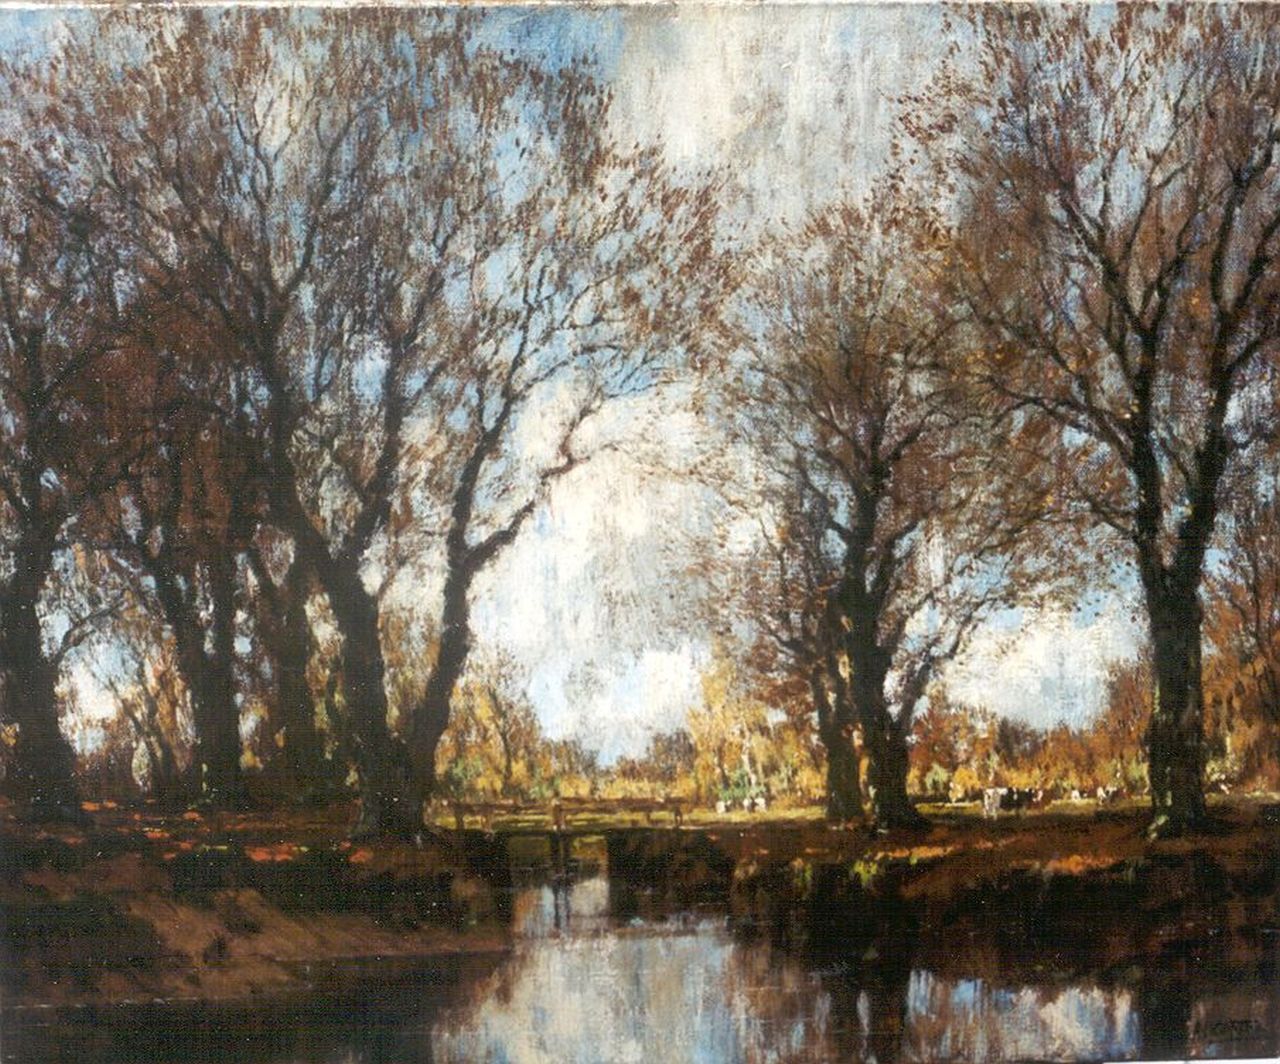 Gorter A.M.  | 'Arnold' Marc Gorter, The Vordense Beek in autumn, oil on canvas 46.3 x 56.2 cm, signed l.r.